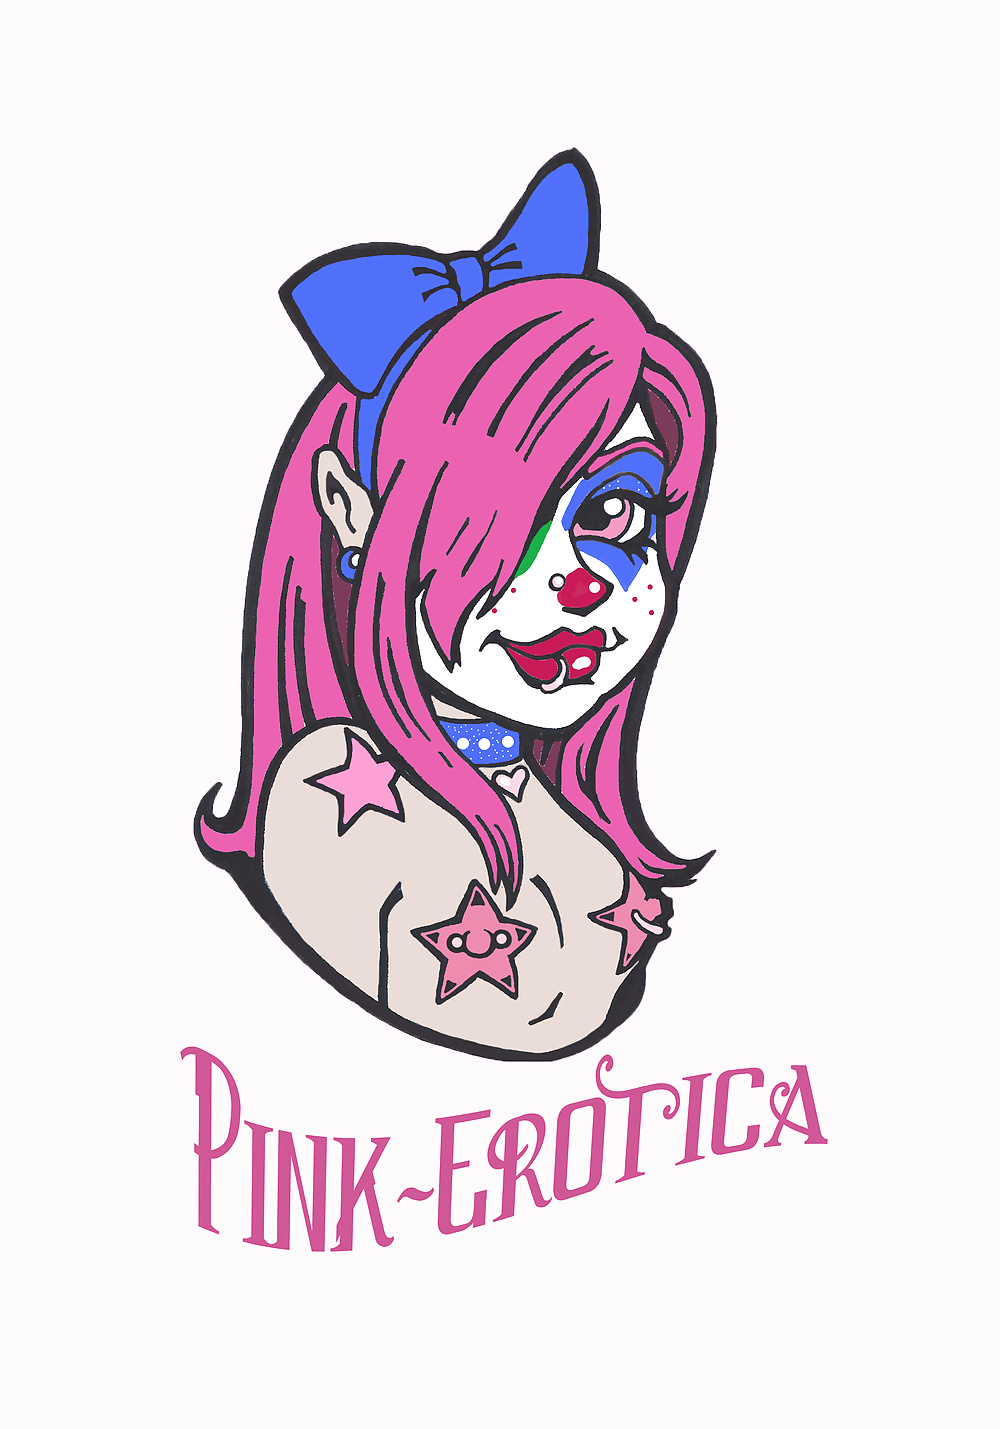 Pink-Erotica Sissyboy Cross Dresser Adorably Pink #28119693